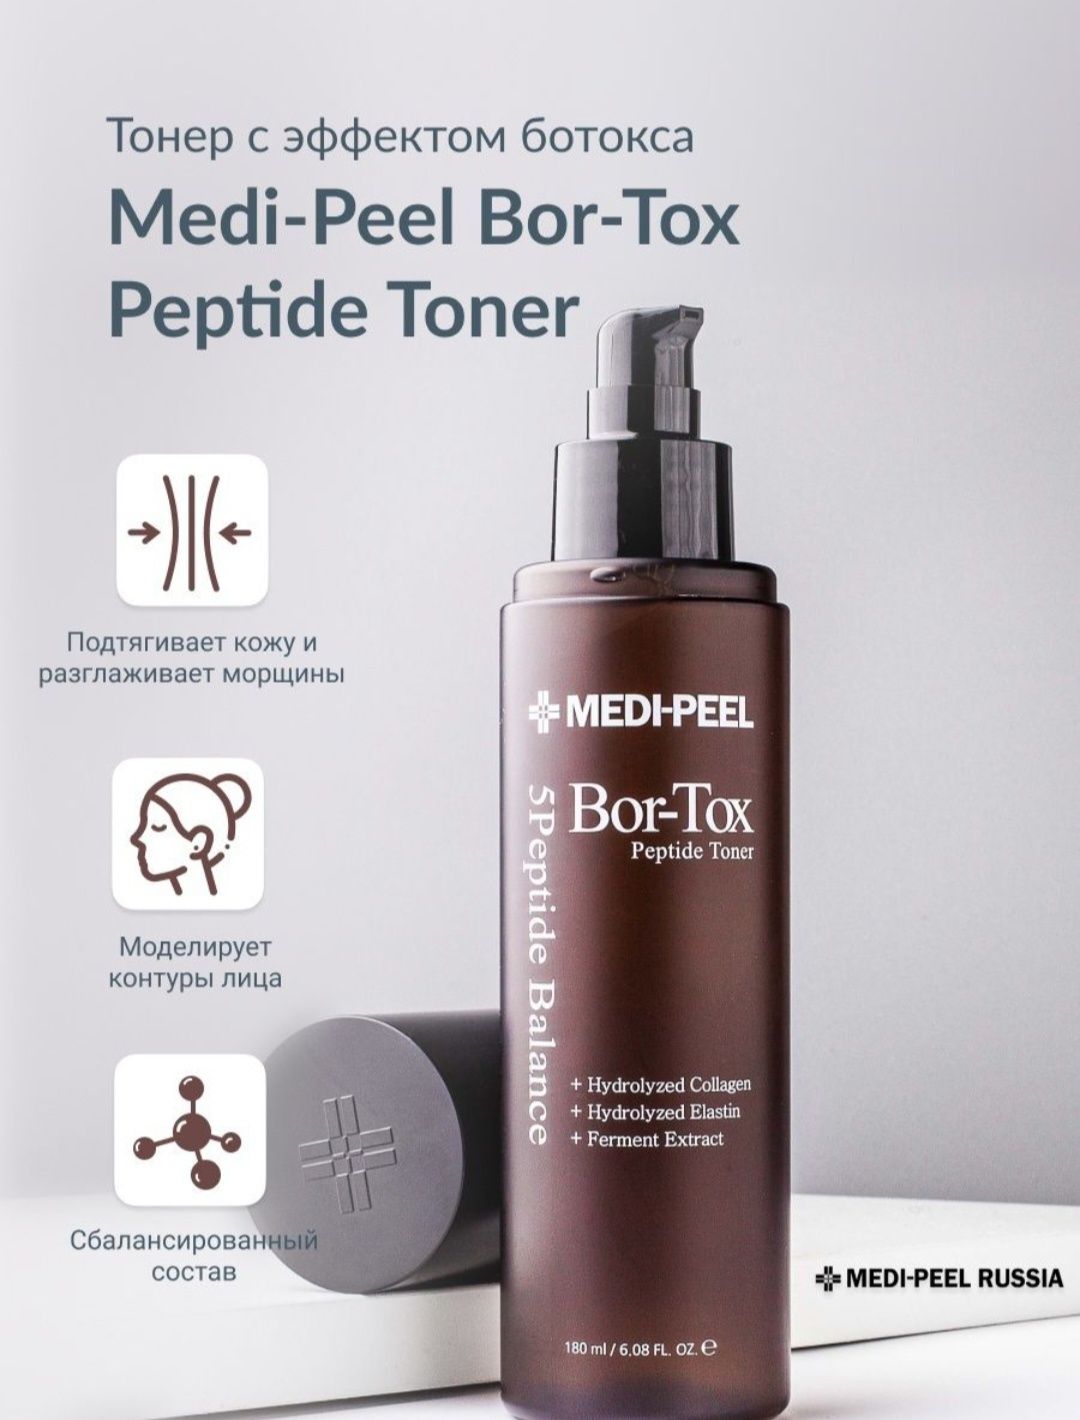 Тонер MEDI-PEEL Bor-Tox 5 Peptide Toner